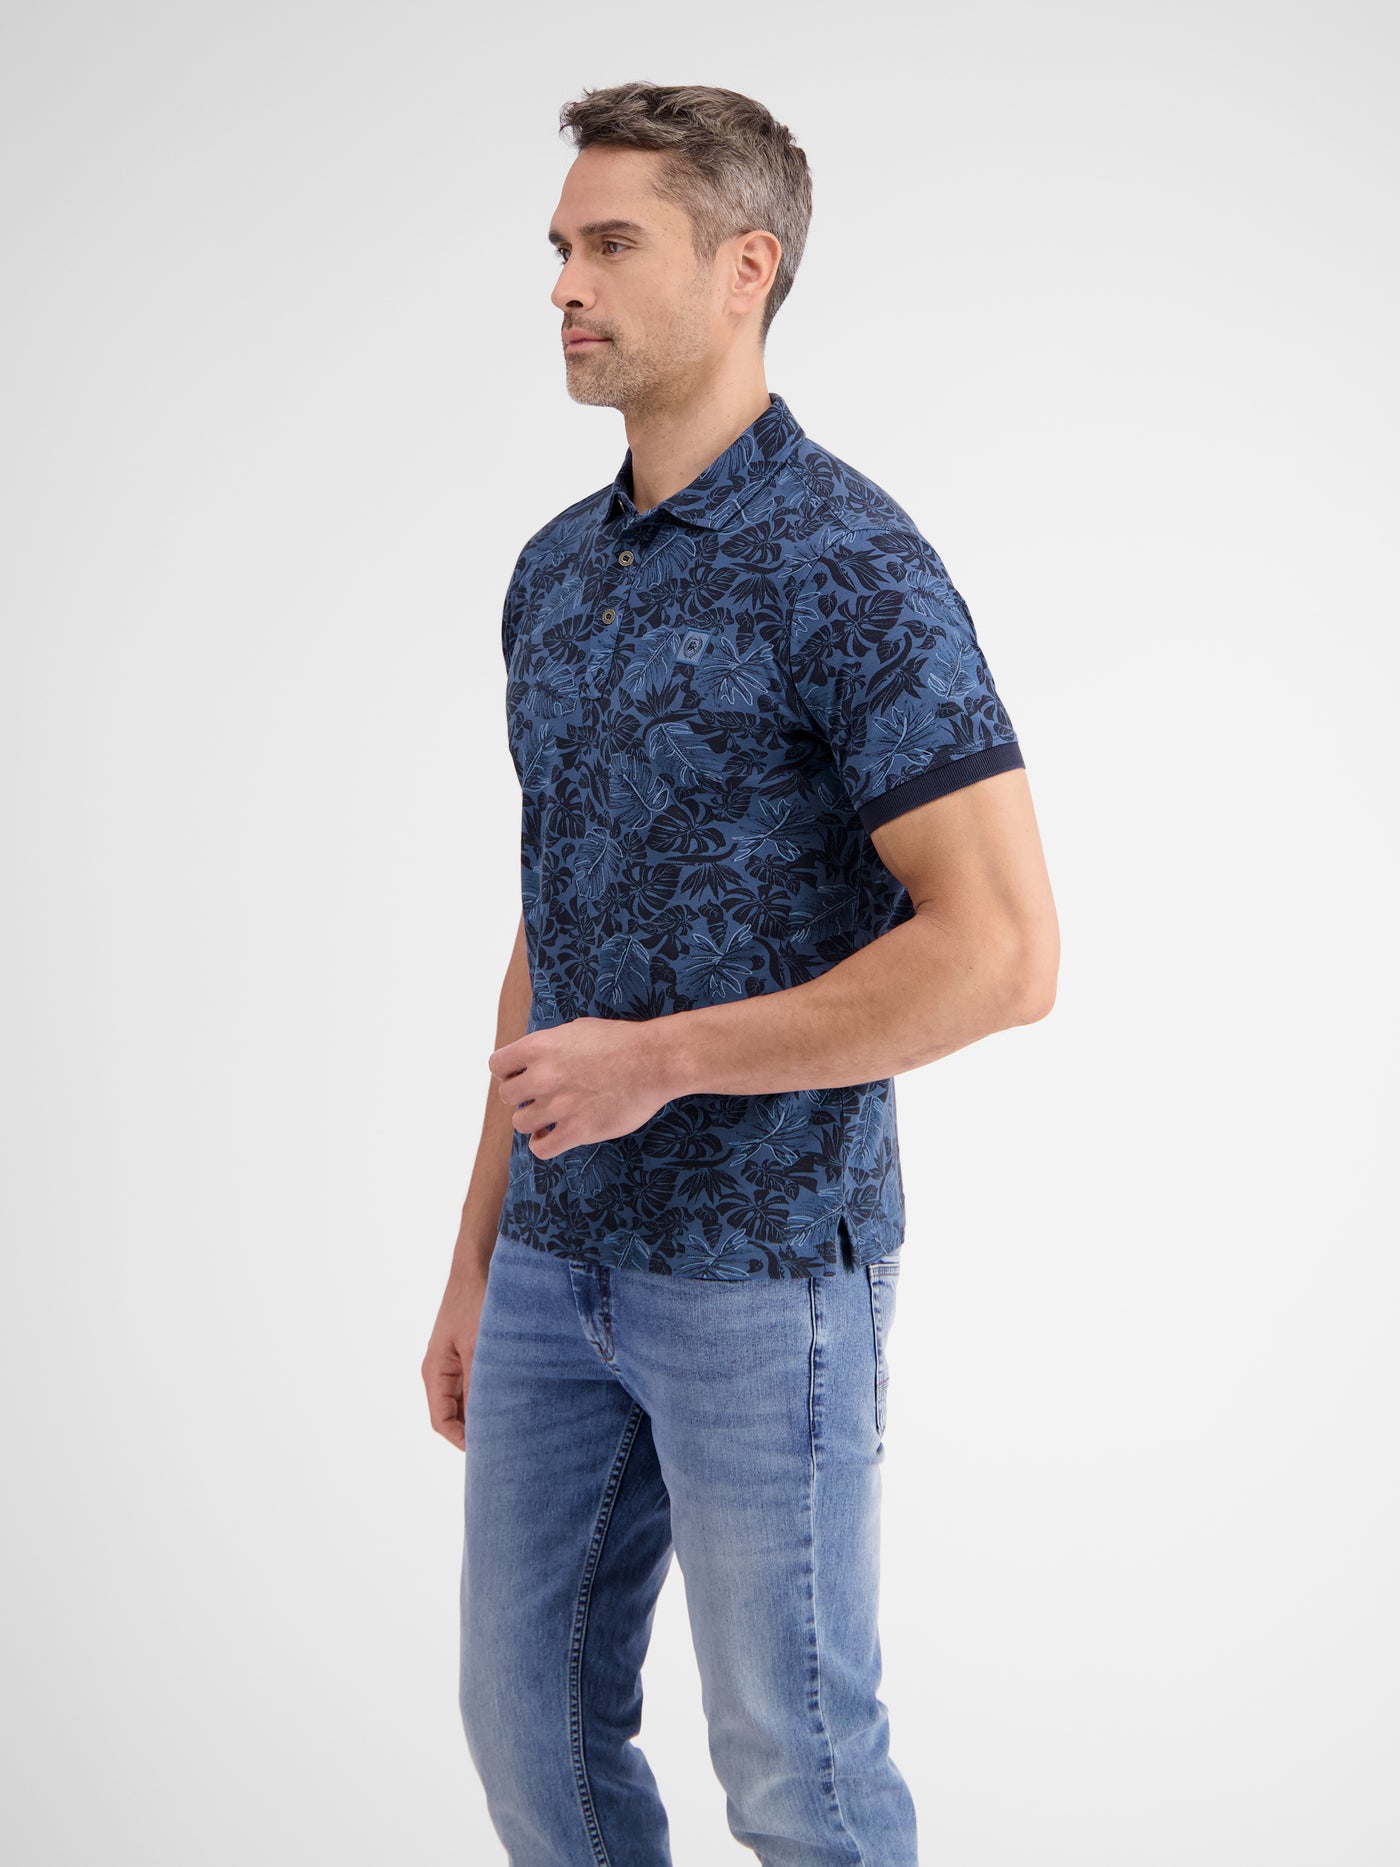 Men's polo shirt, floral print